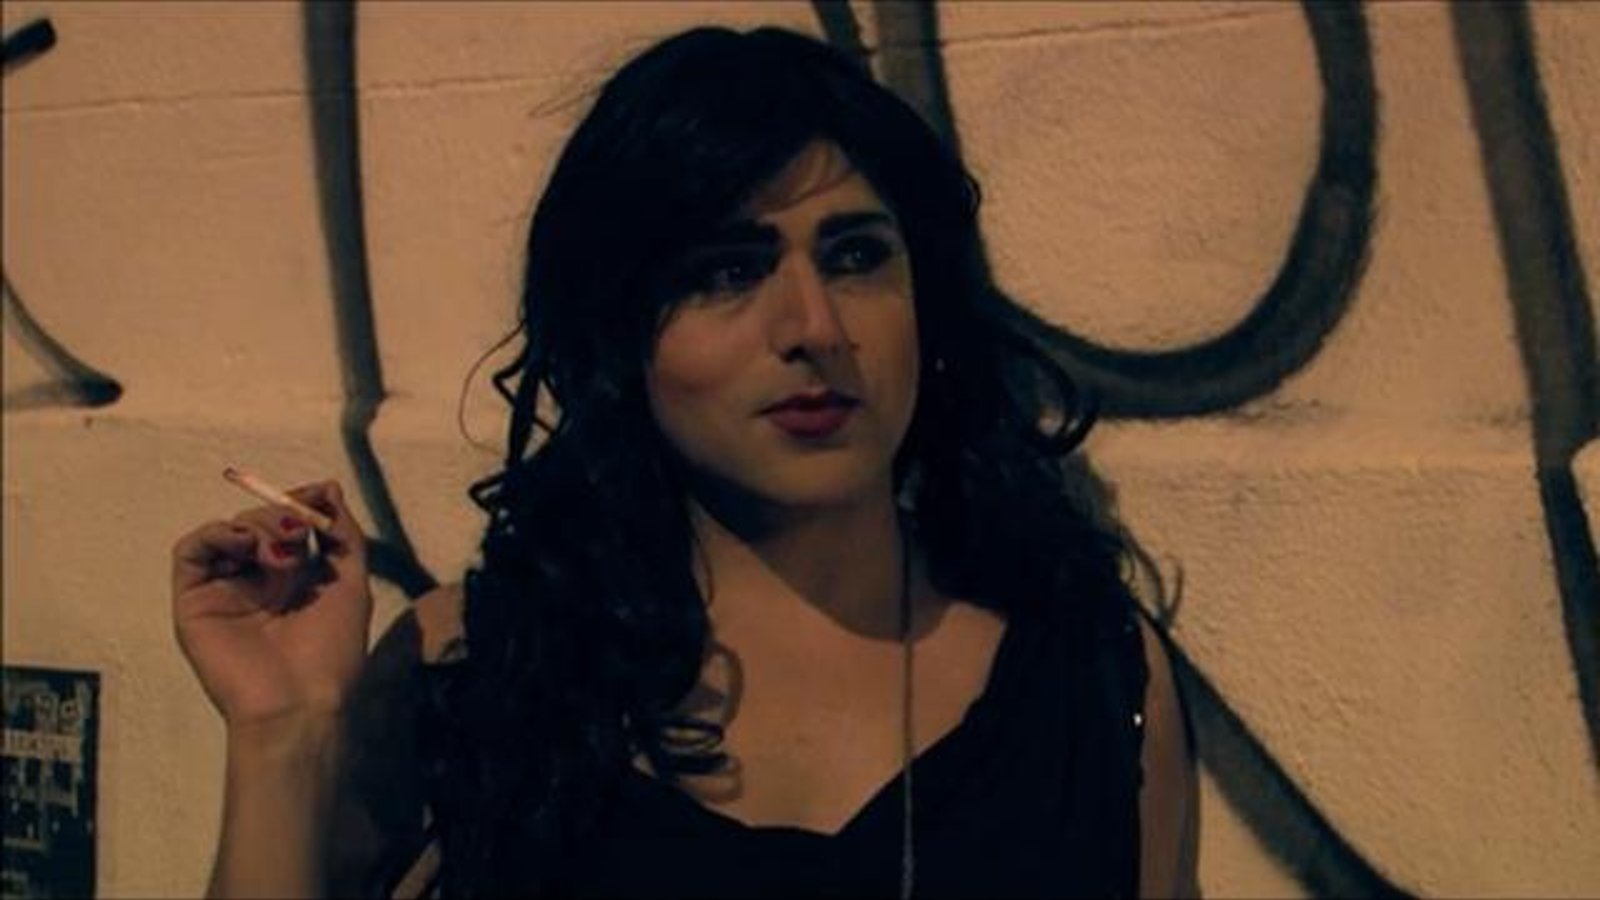 Samira - The Sex Industry Through the Eyes of an Algerian Trans Refugee